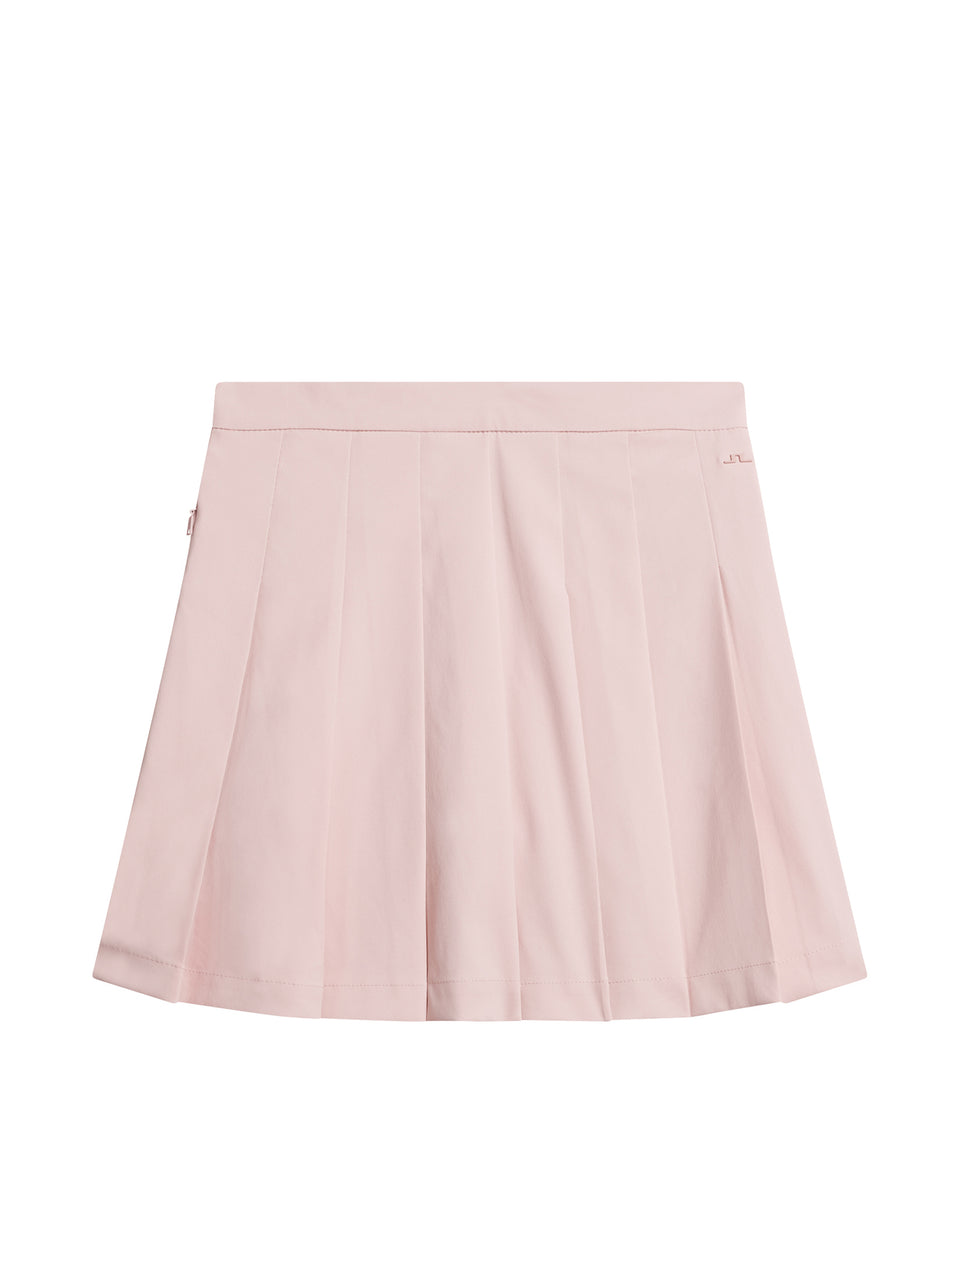 Adina Skirt / Powder Pink